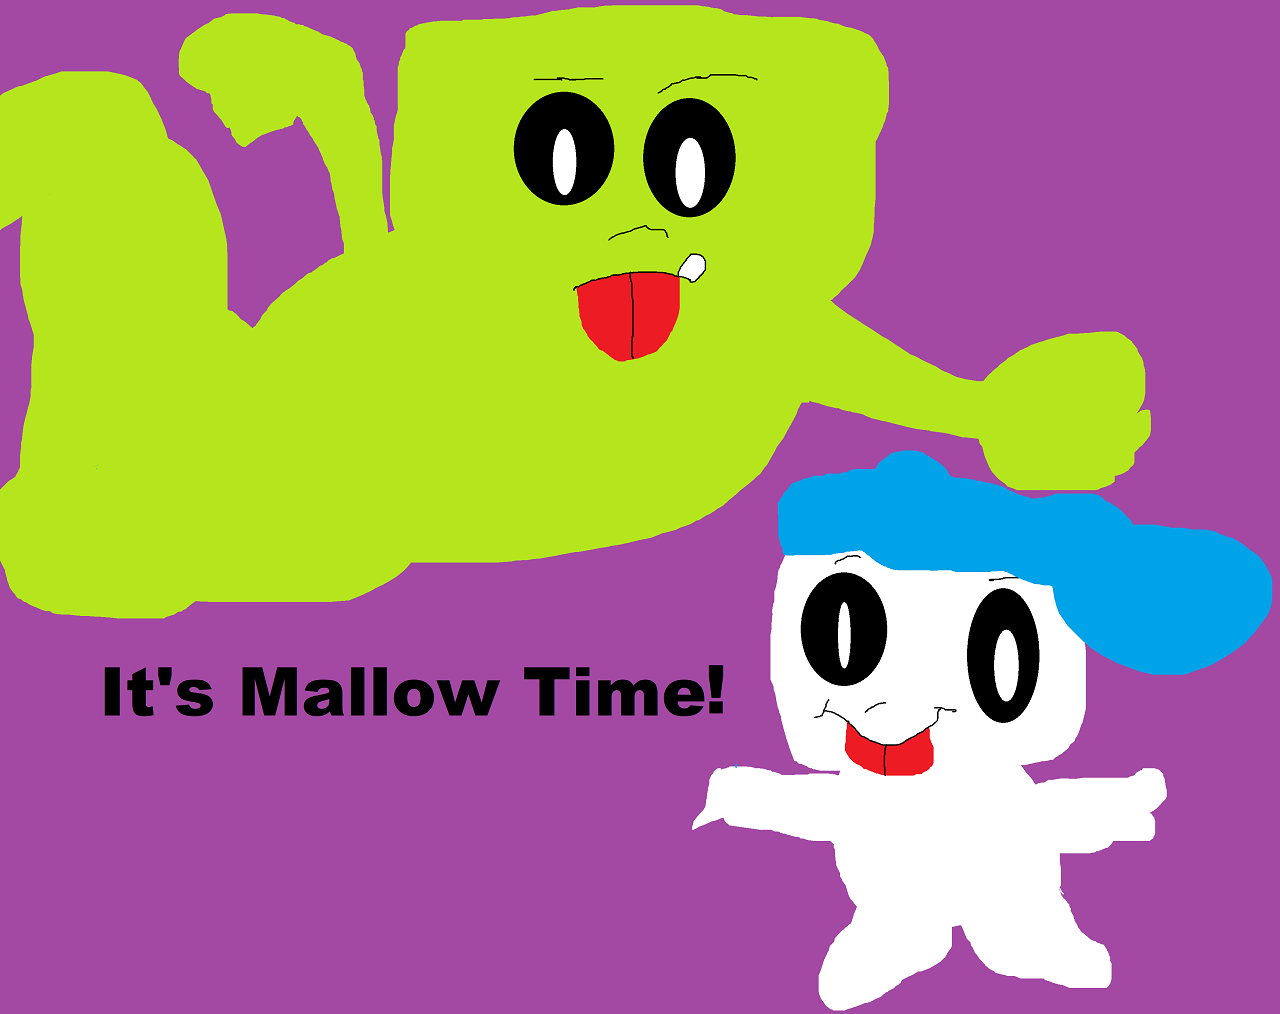 It's Mallow Time by Falconlobo